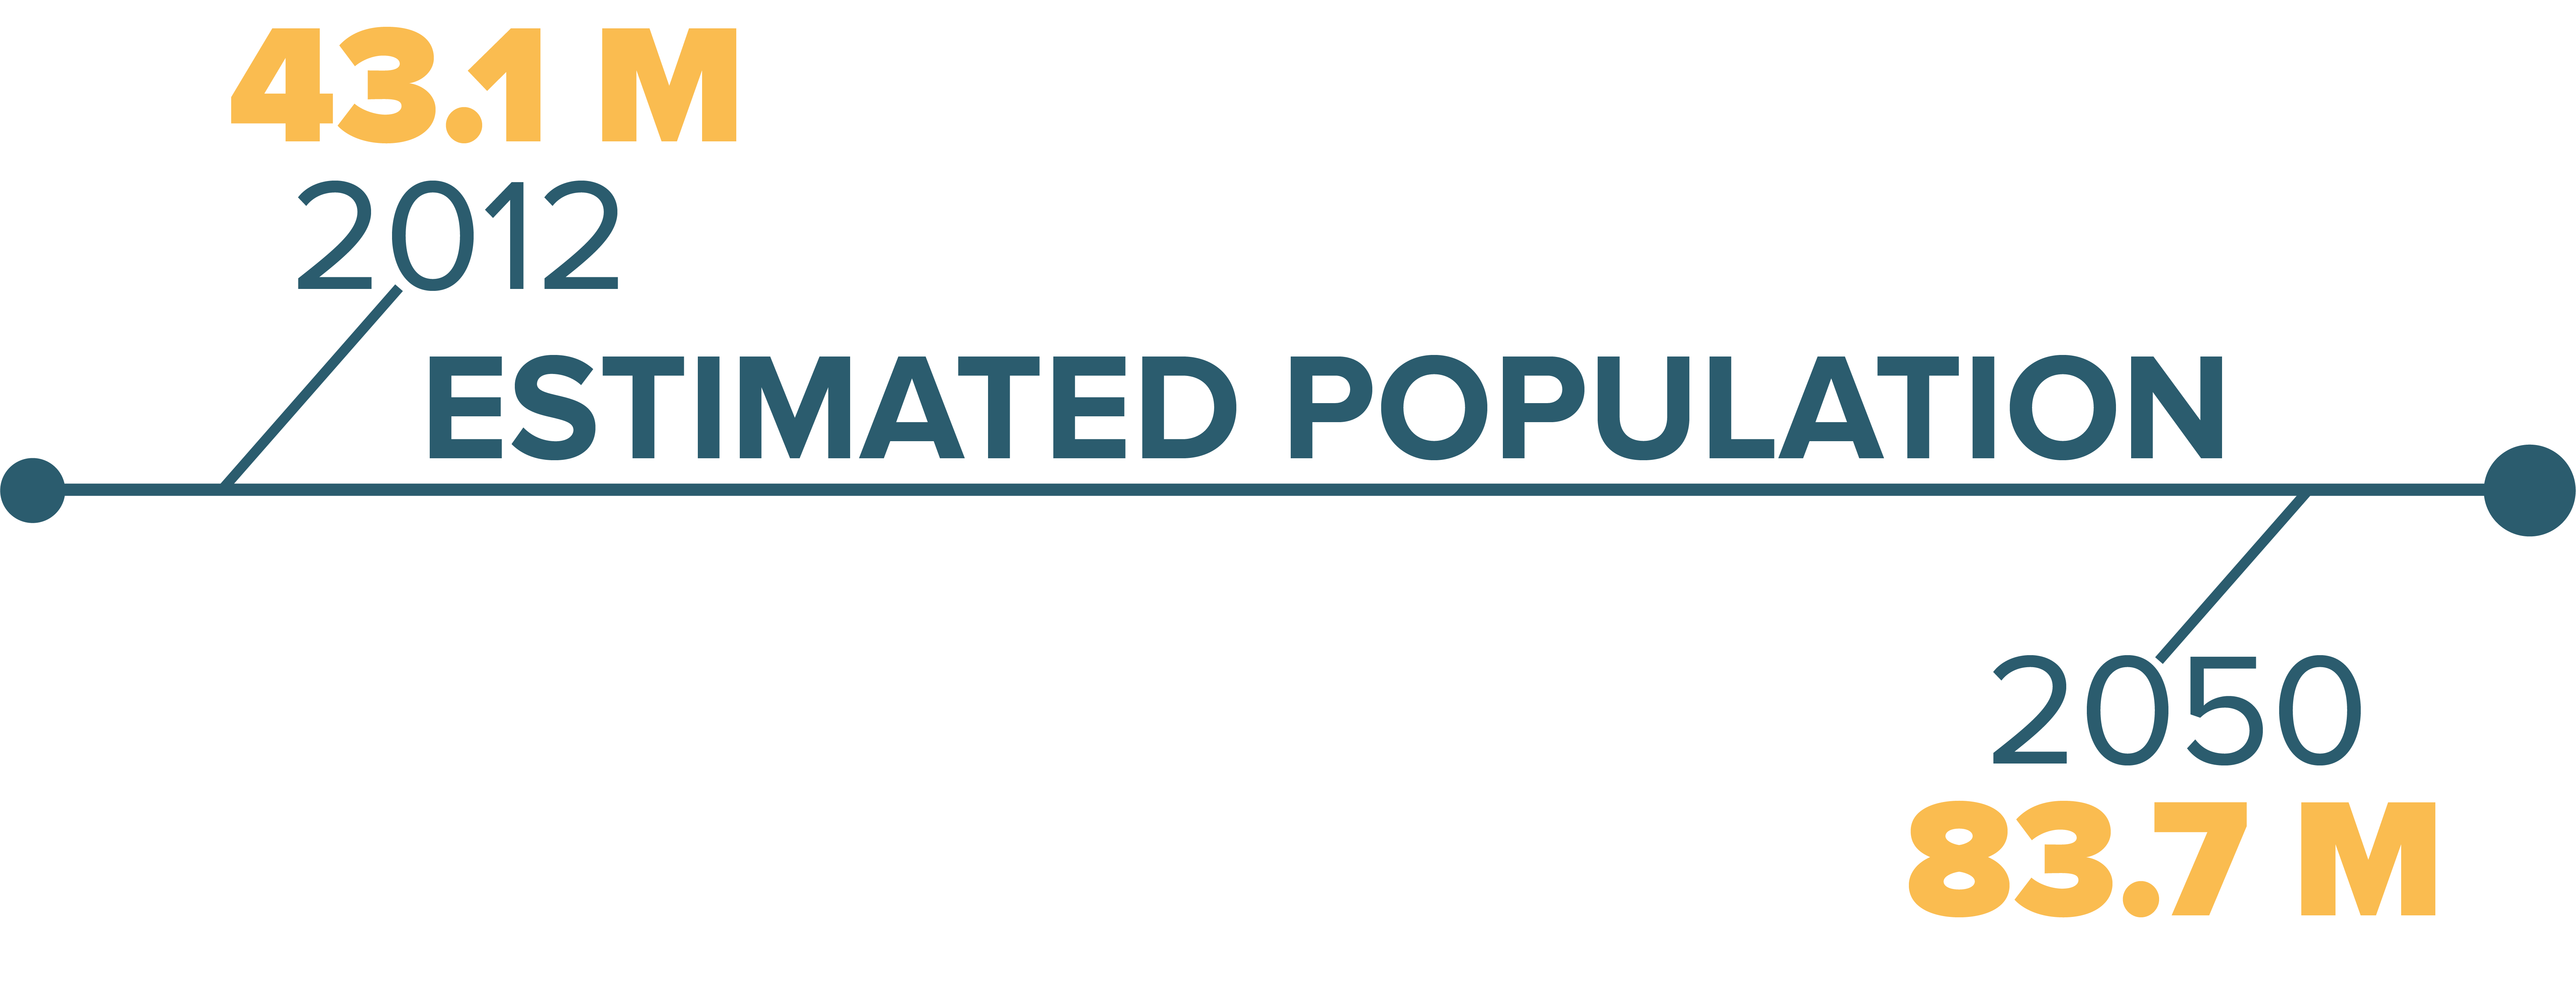 ESTIMATED POPULATION